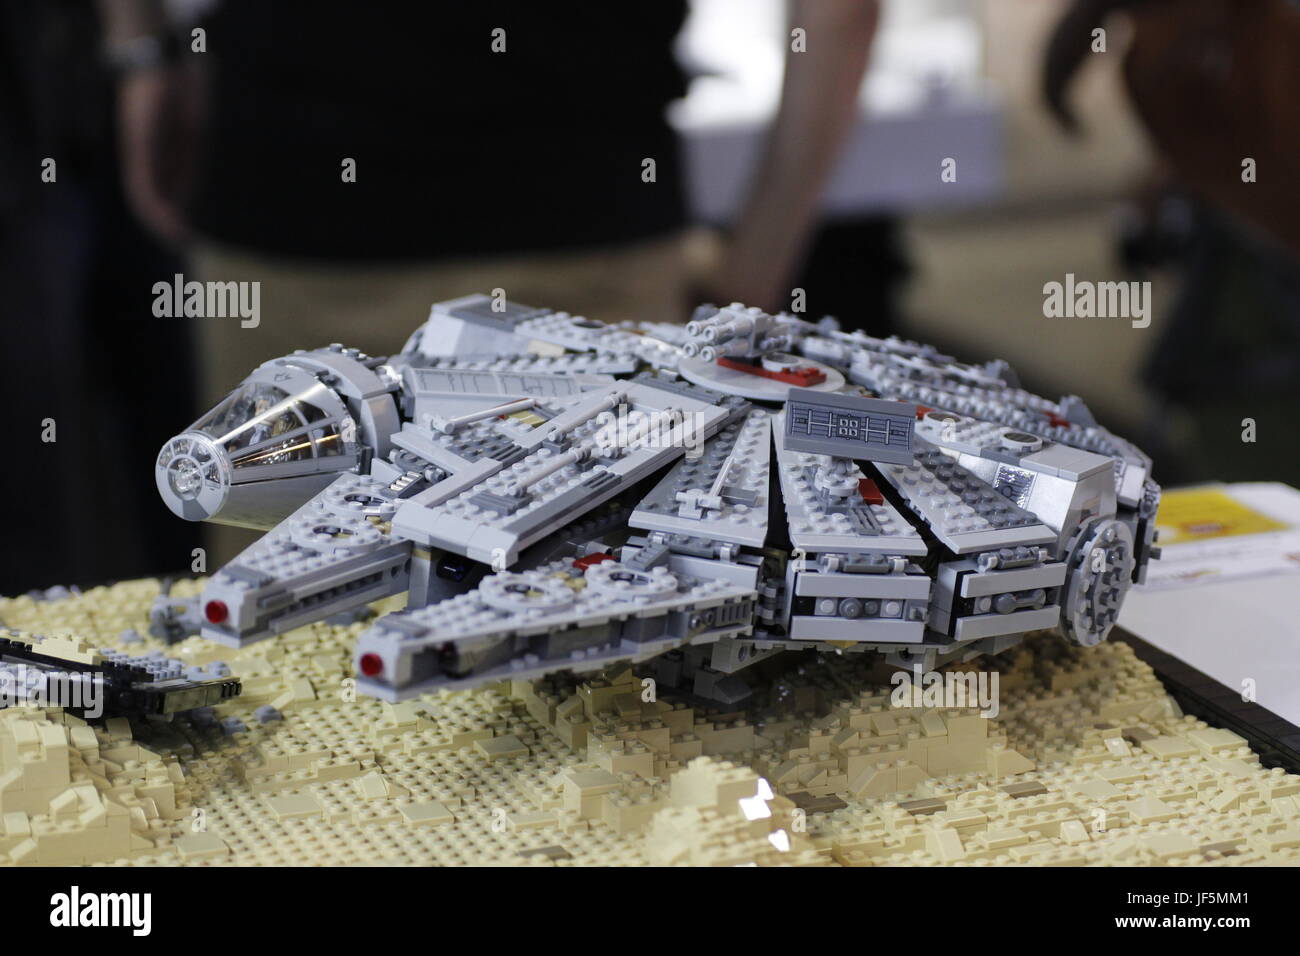 Lego replica of Millennium Falcon, spaceship from Star Wars Stock Photo -  Alamy